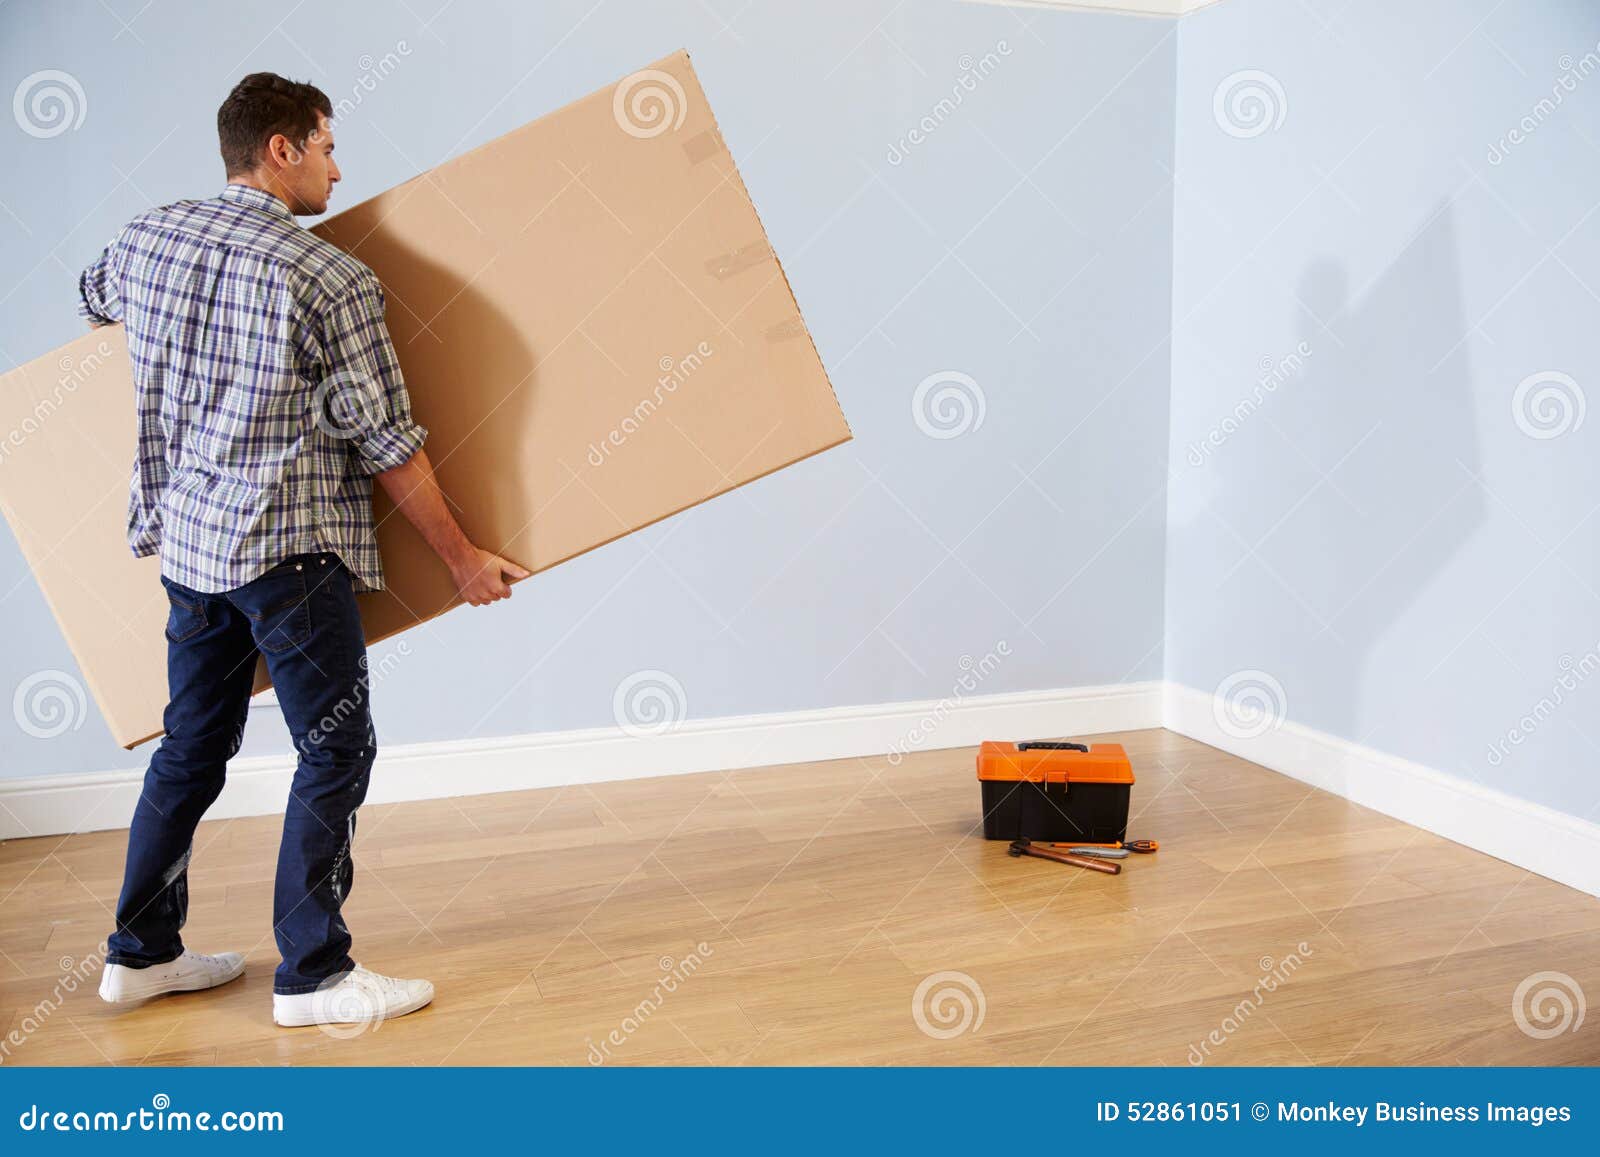 man preparing to assemble flat pack furniture